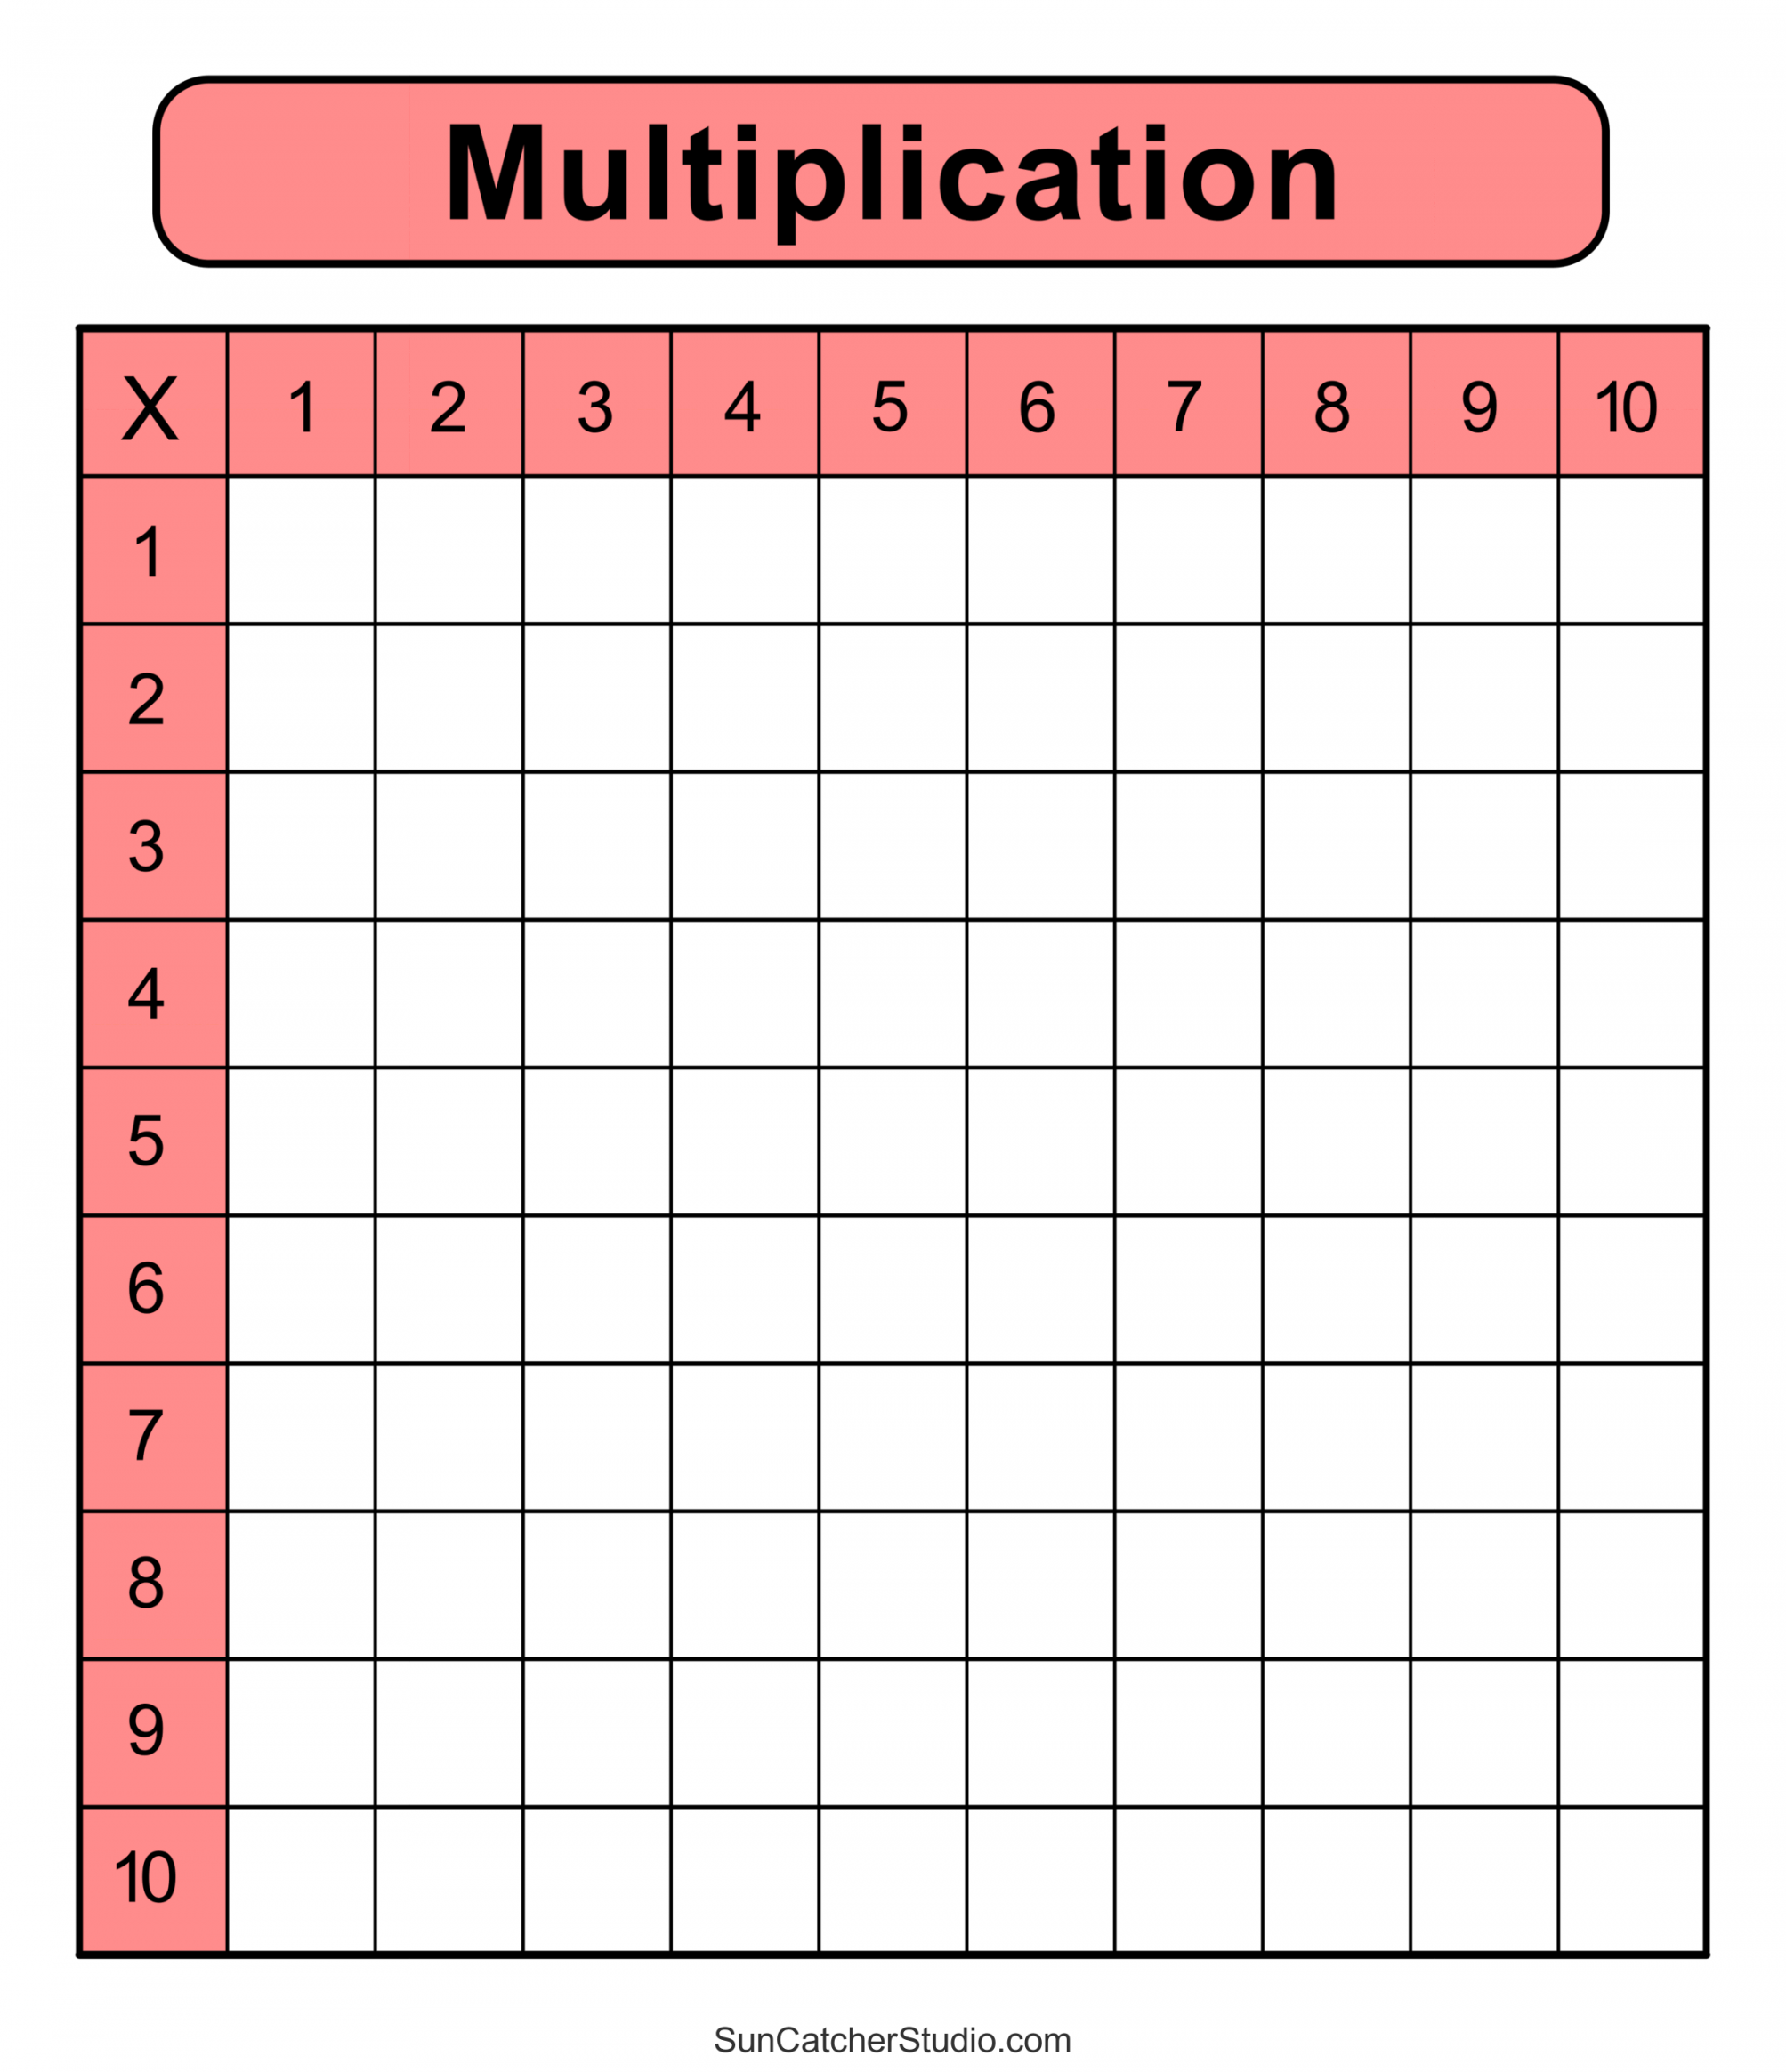 Multiplication Charts (PDF): Free Printable Times Tables – DIY  - FREE Printables - Multiplication Table Blank